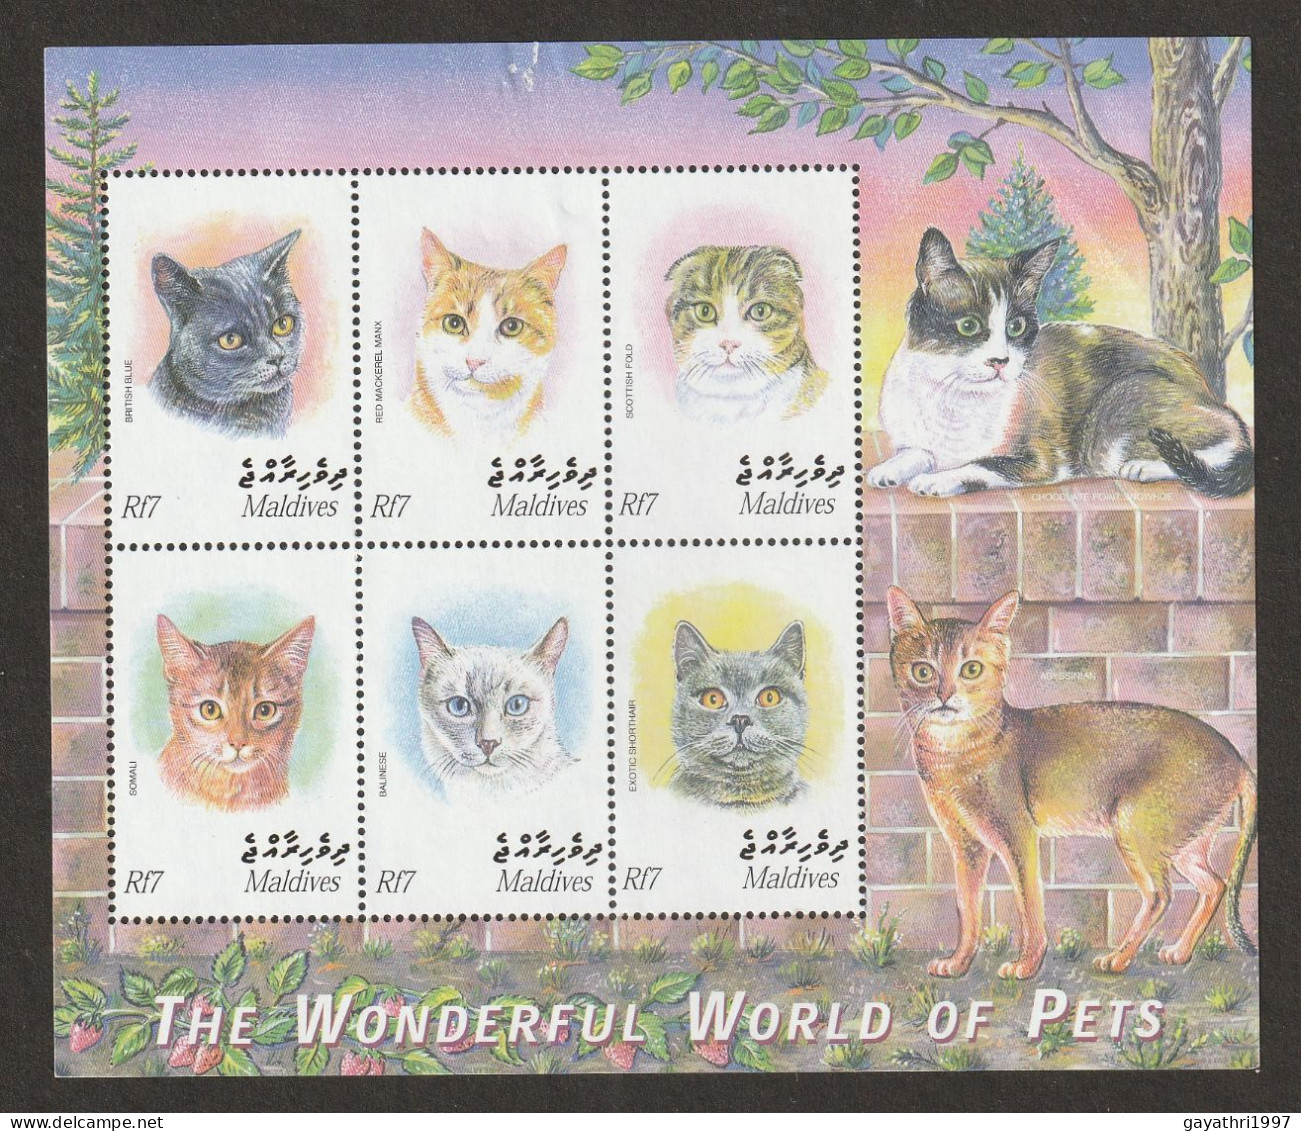 Maldives The Wonderful World Of Pets Cats Miniature Sheet Mint Good Condition (S-50) - Marionnetten